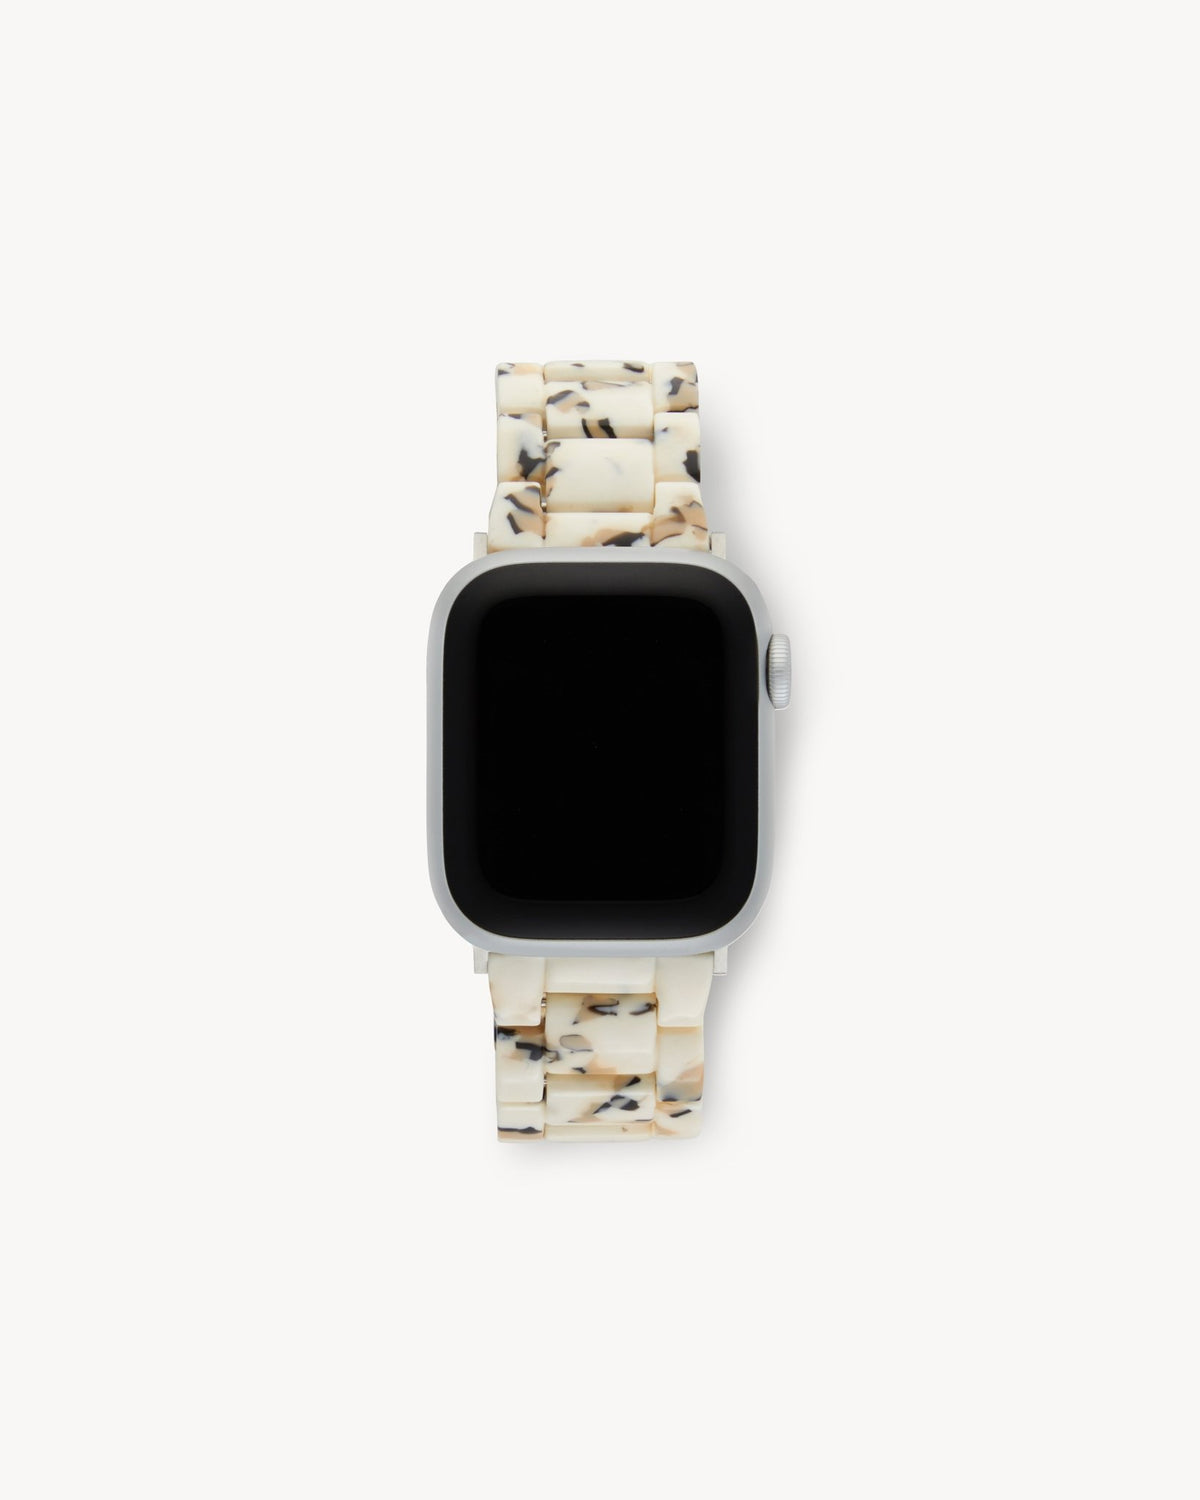 MACHETE Deluxe Apple Watch Band Set in Terazzo